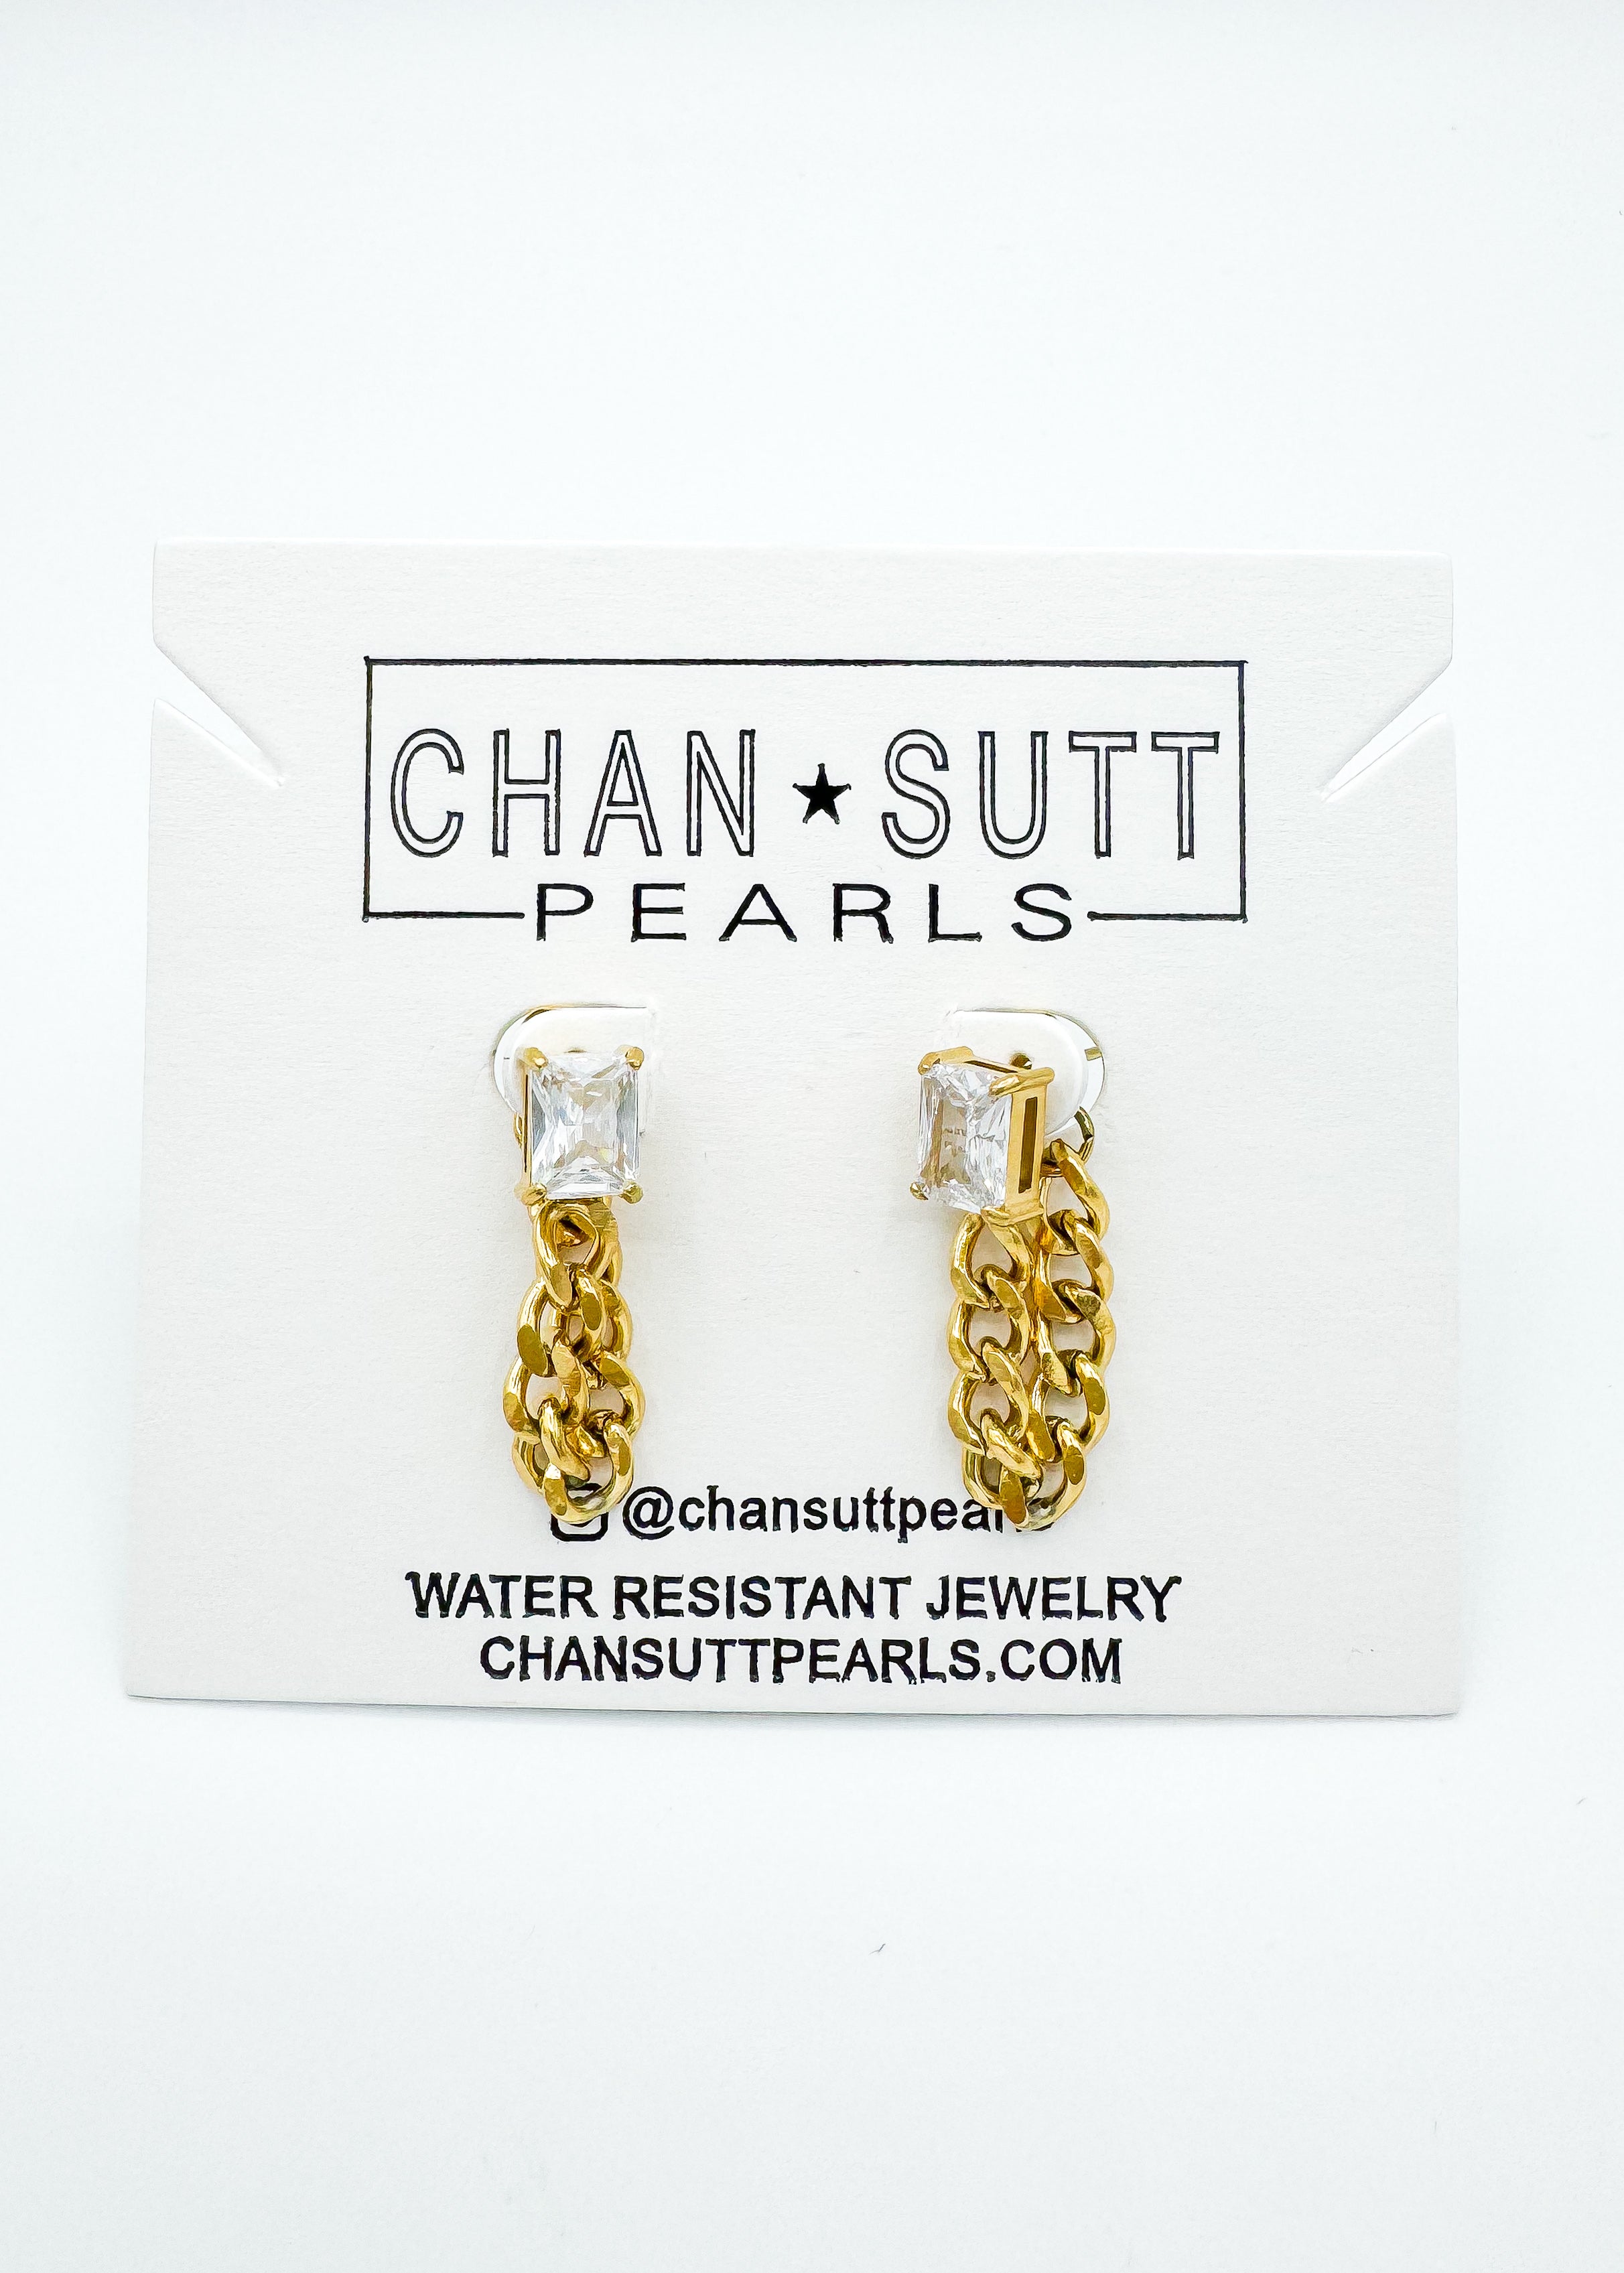 The Gold Diamond Chain Earrings